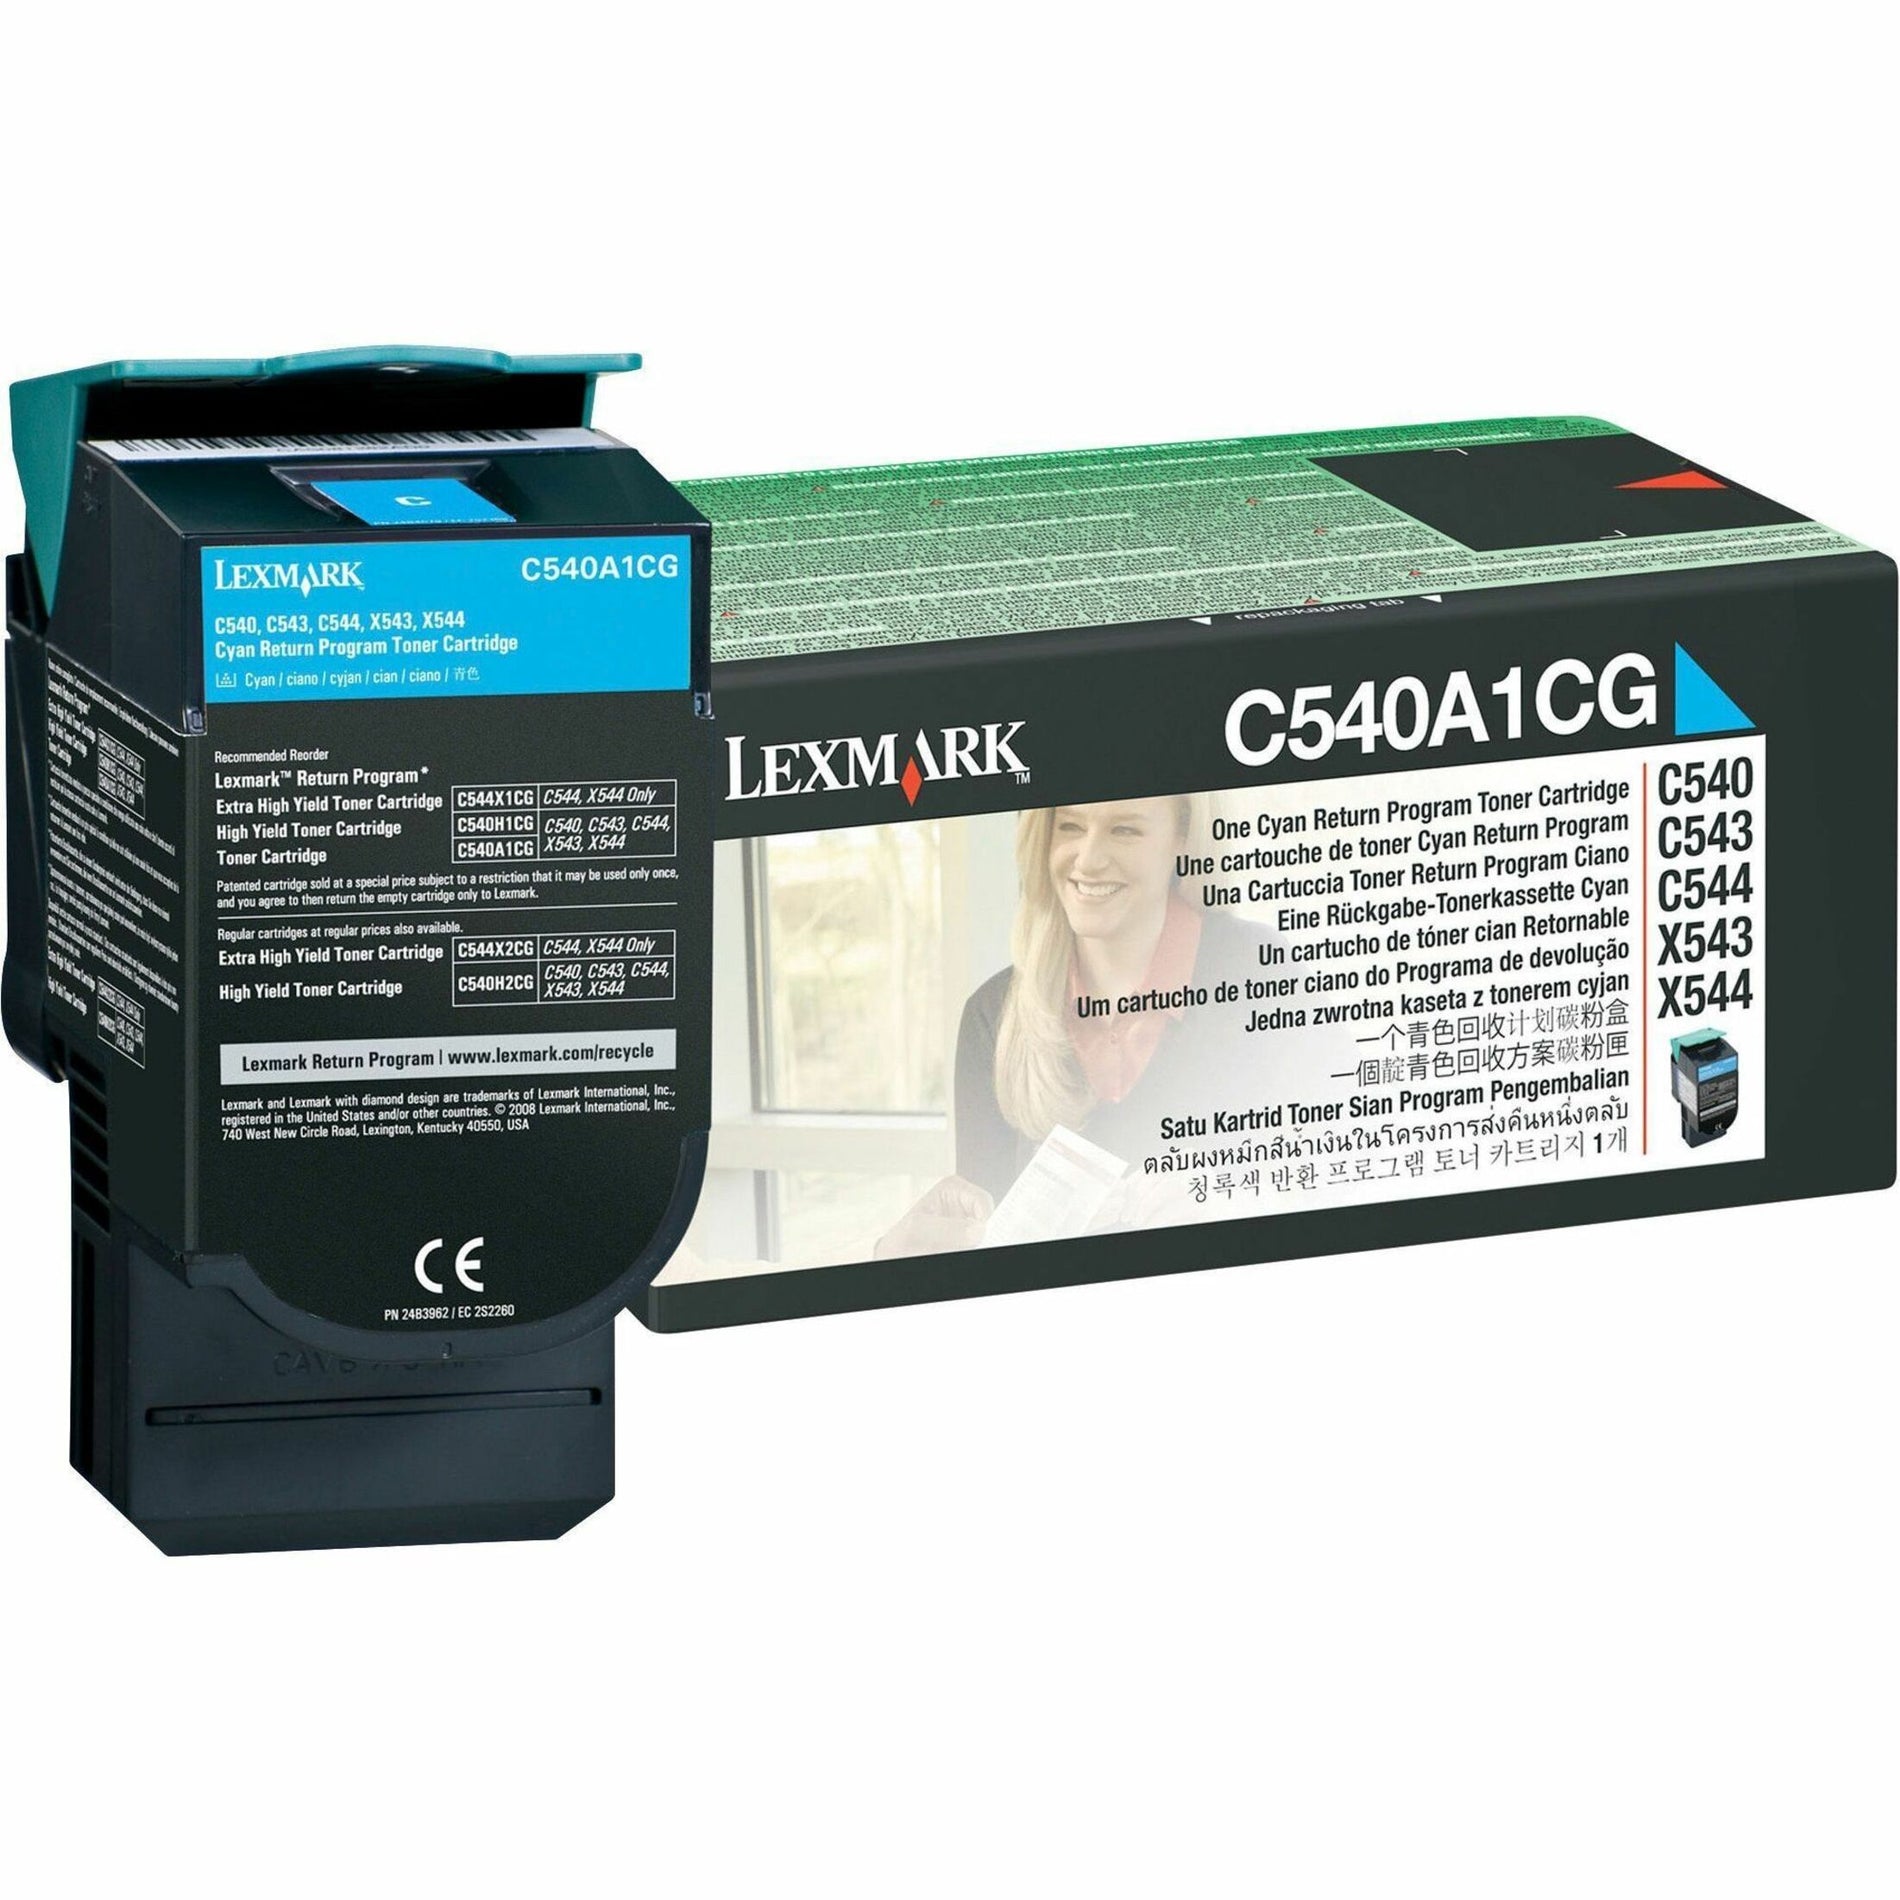 Lexmark C540A1CG Print Cartridge, Cyan - 1000 Page Yield